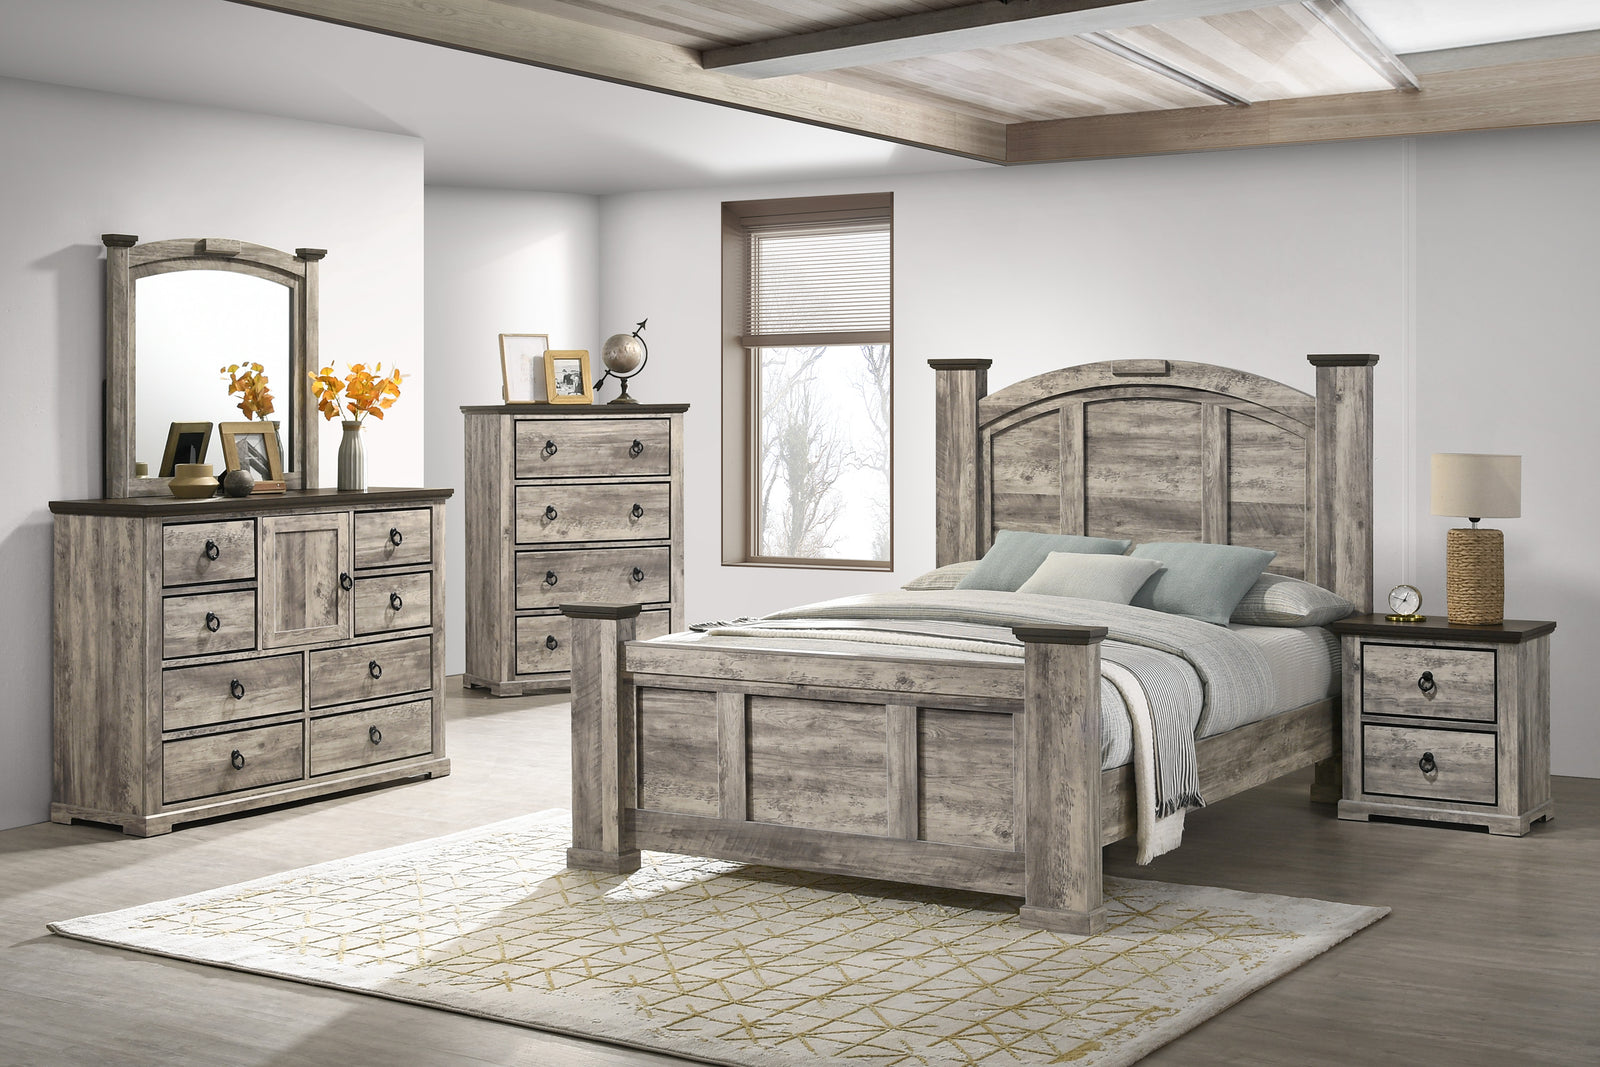 Ella-mae Gray Modern Contemporary Solid Wood And Veneers Queen Bed